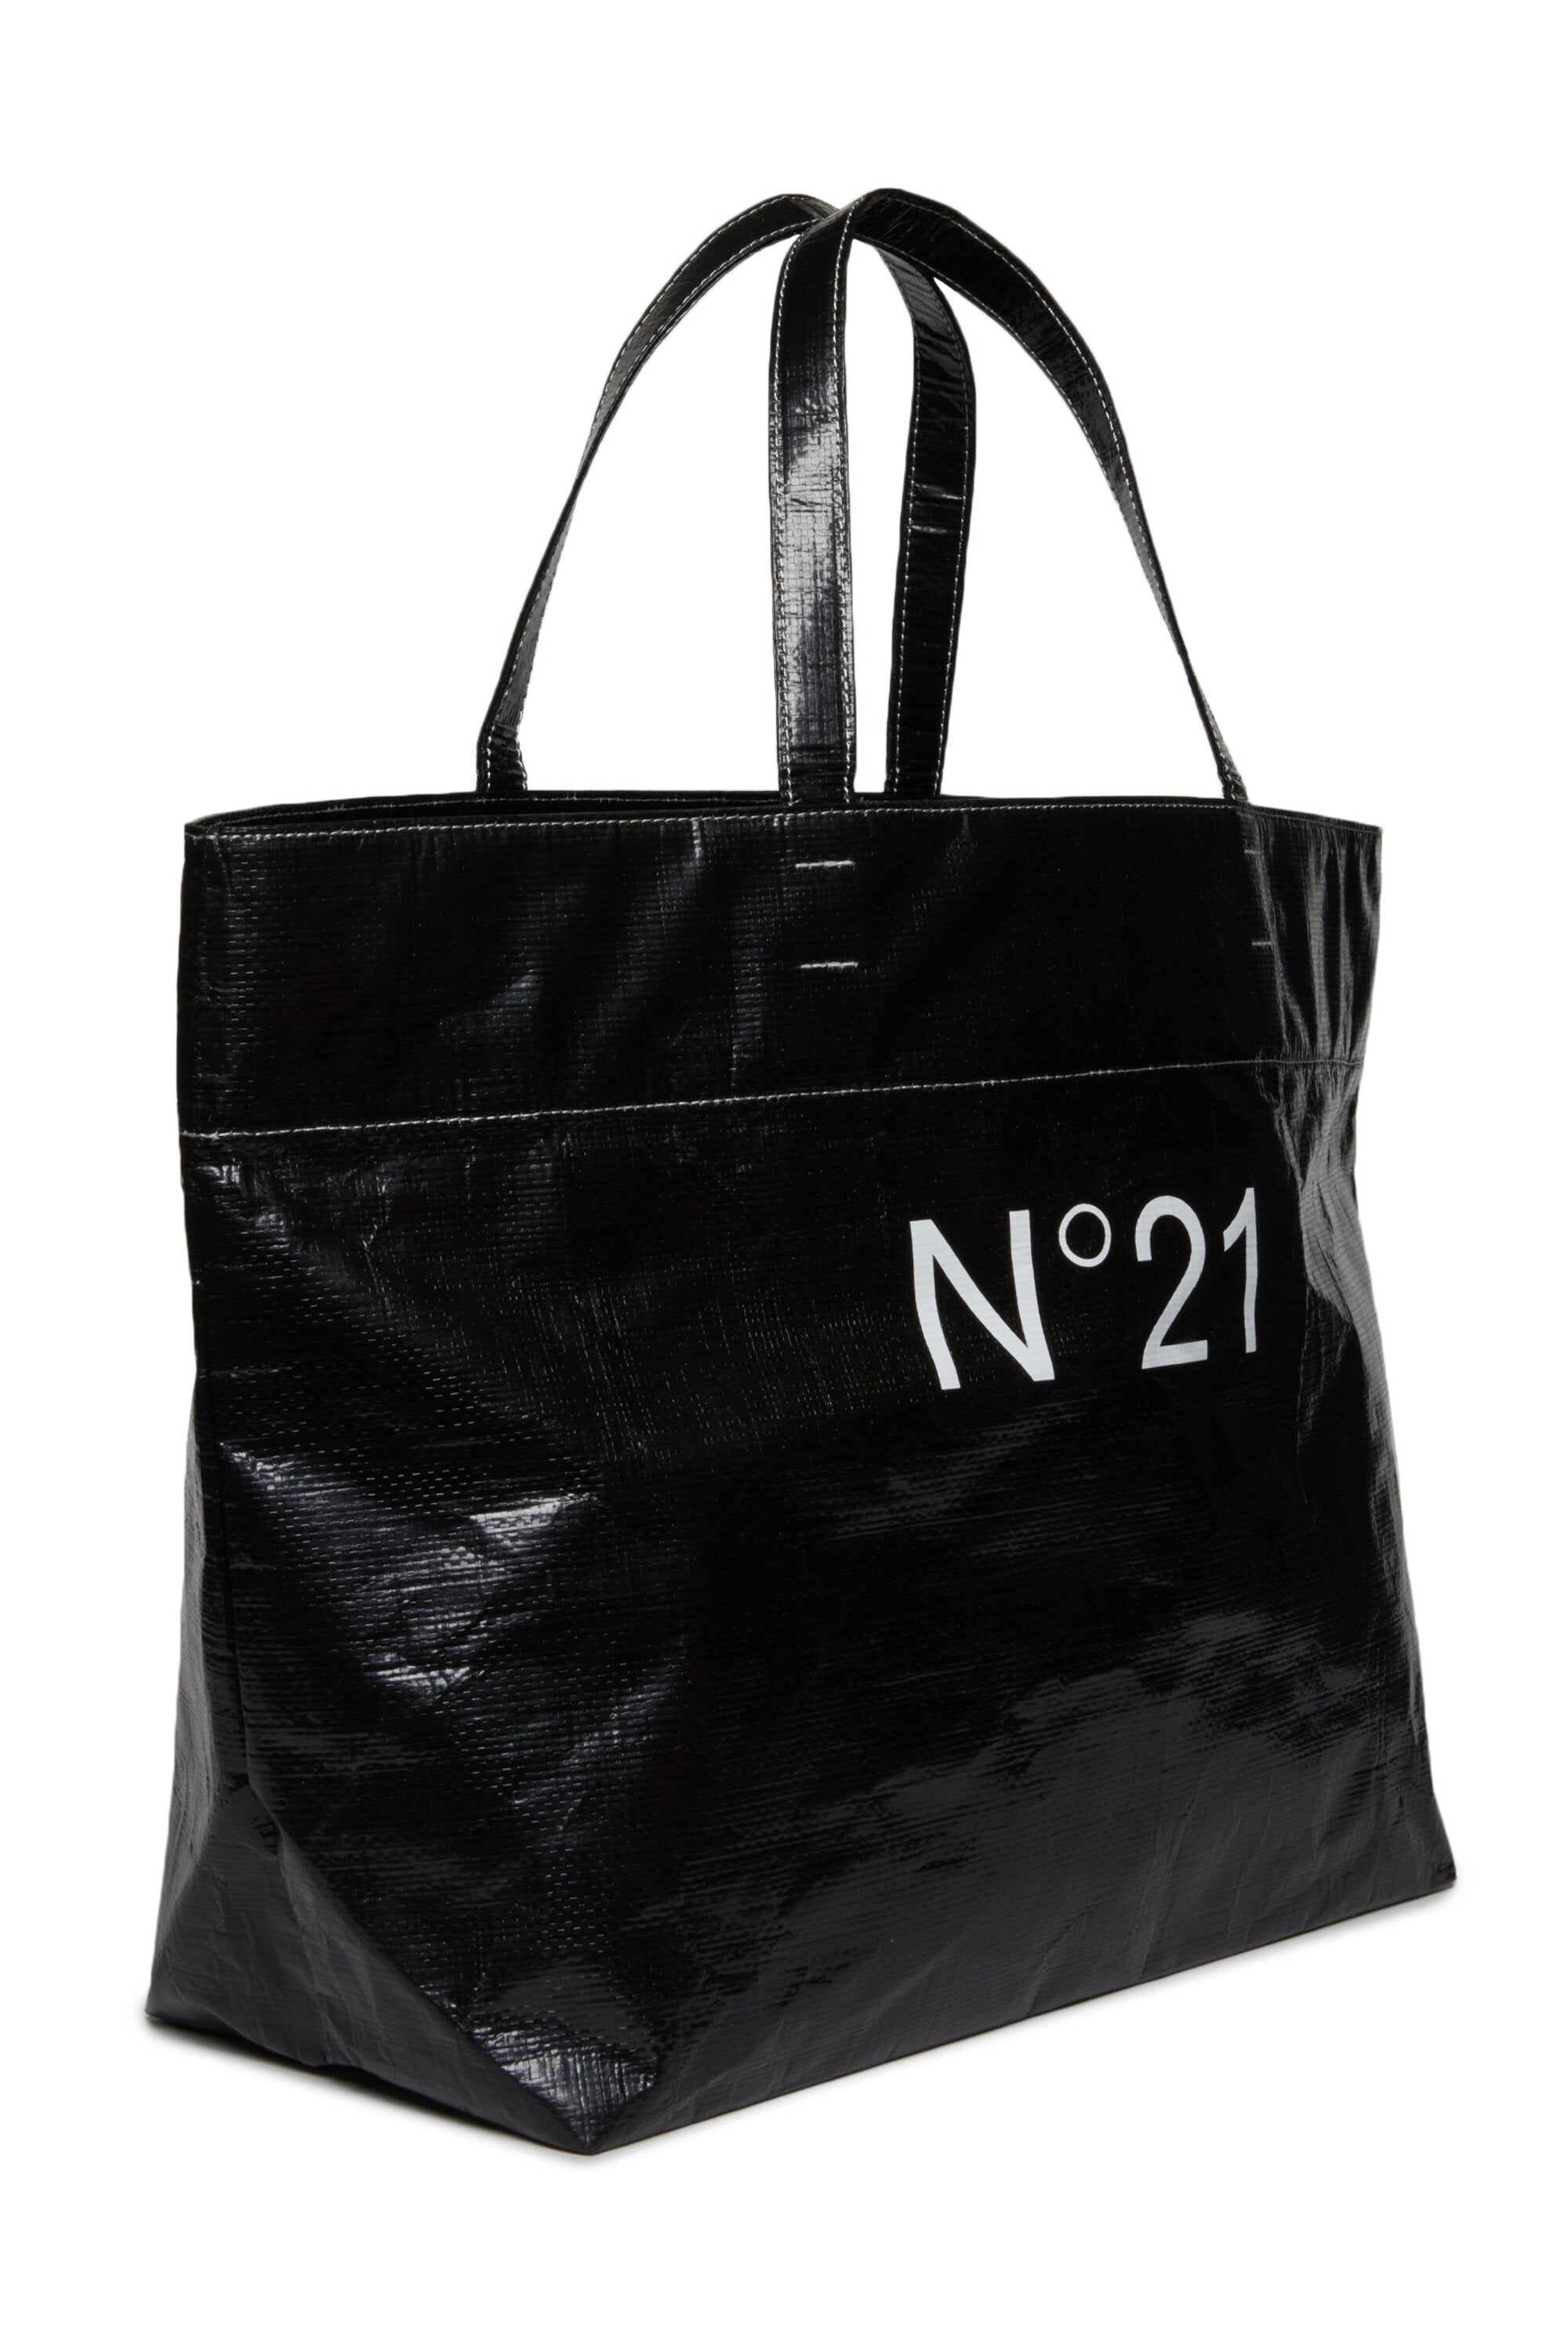 Black shopper bag with institutional logo